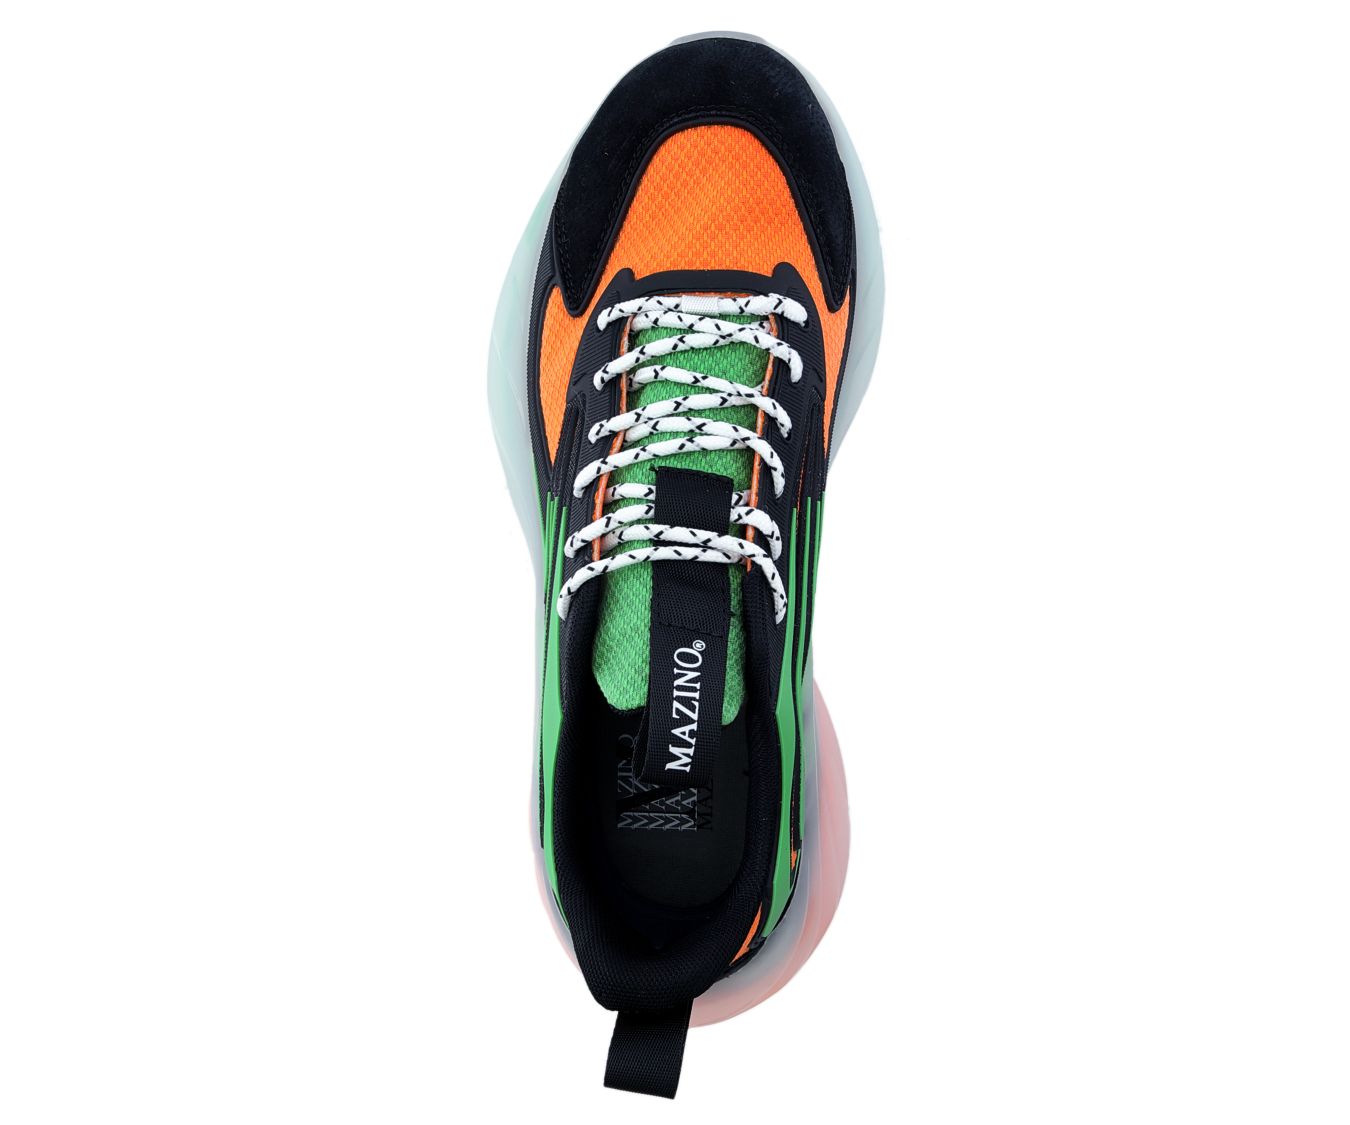 Mazino Krypton orange and green sneakers